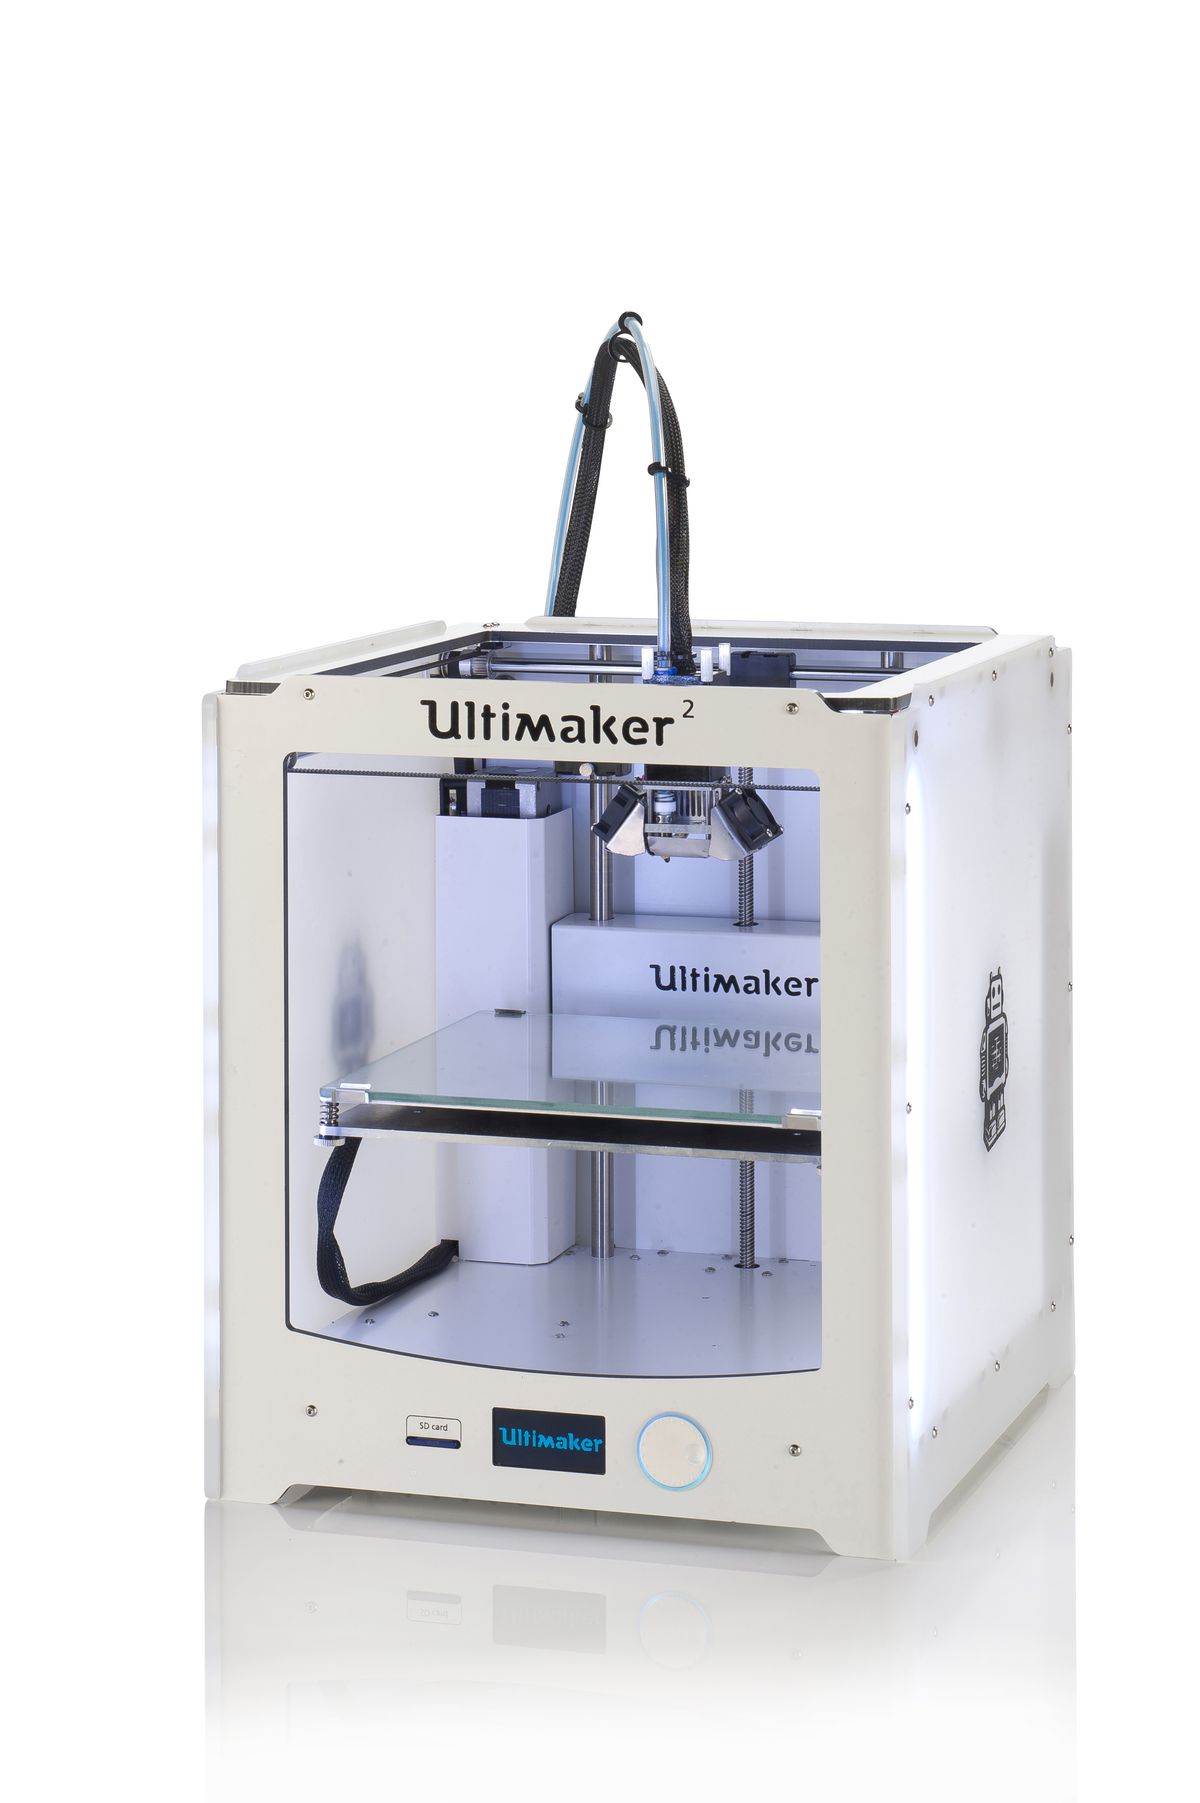 Ultimaker 2 3D Printer Review - HXyRDcgpAa4Vev3cgJ943U 1200 80